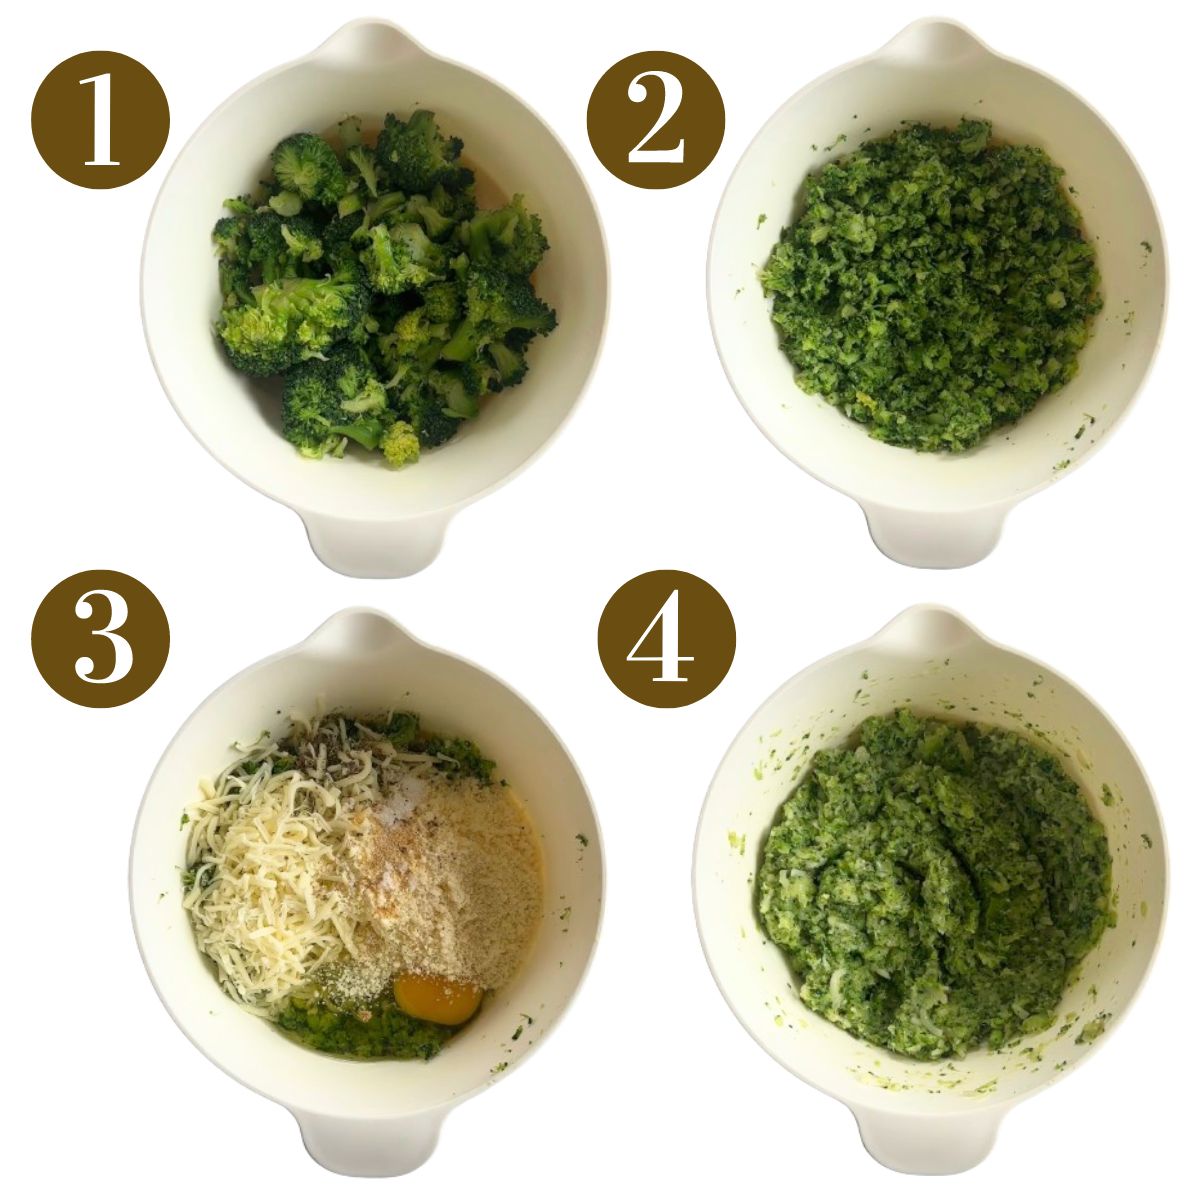 Steps to make broccoli cheese bread.